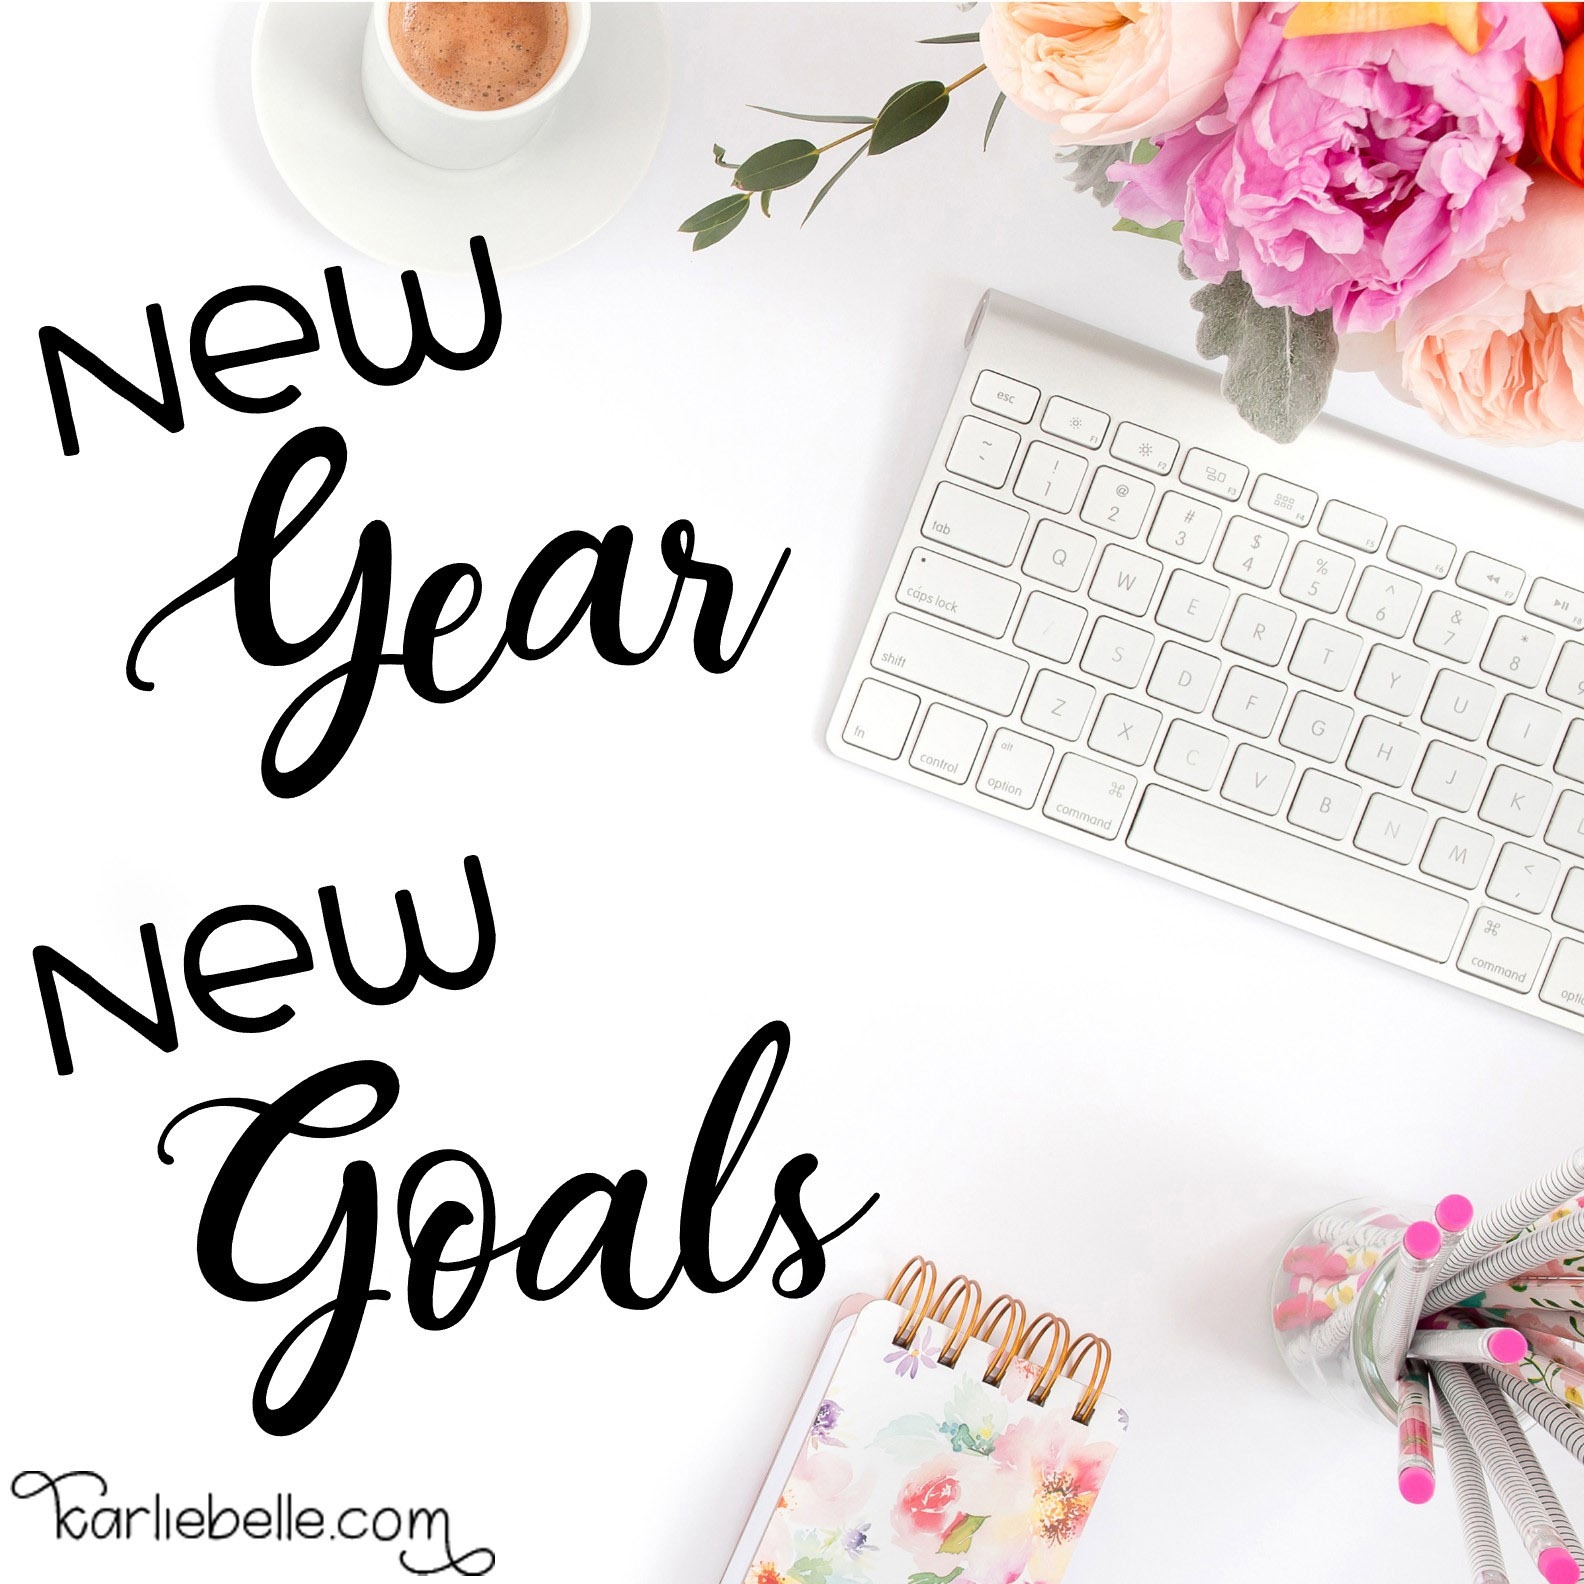 2018: A New Year equals New Goals